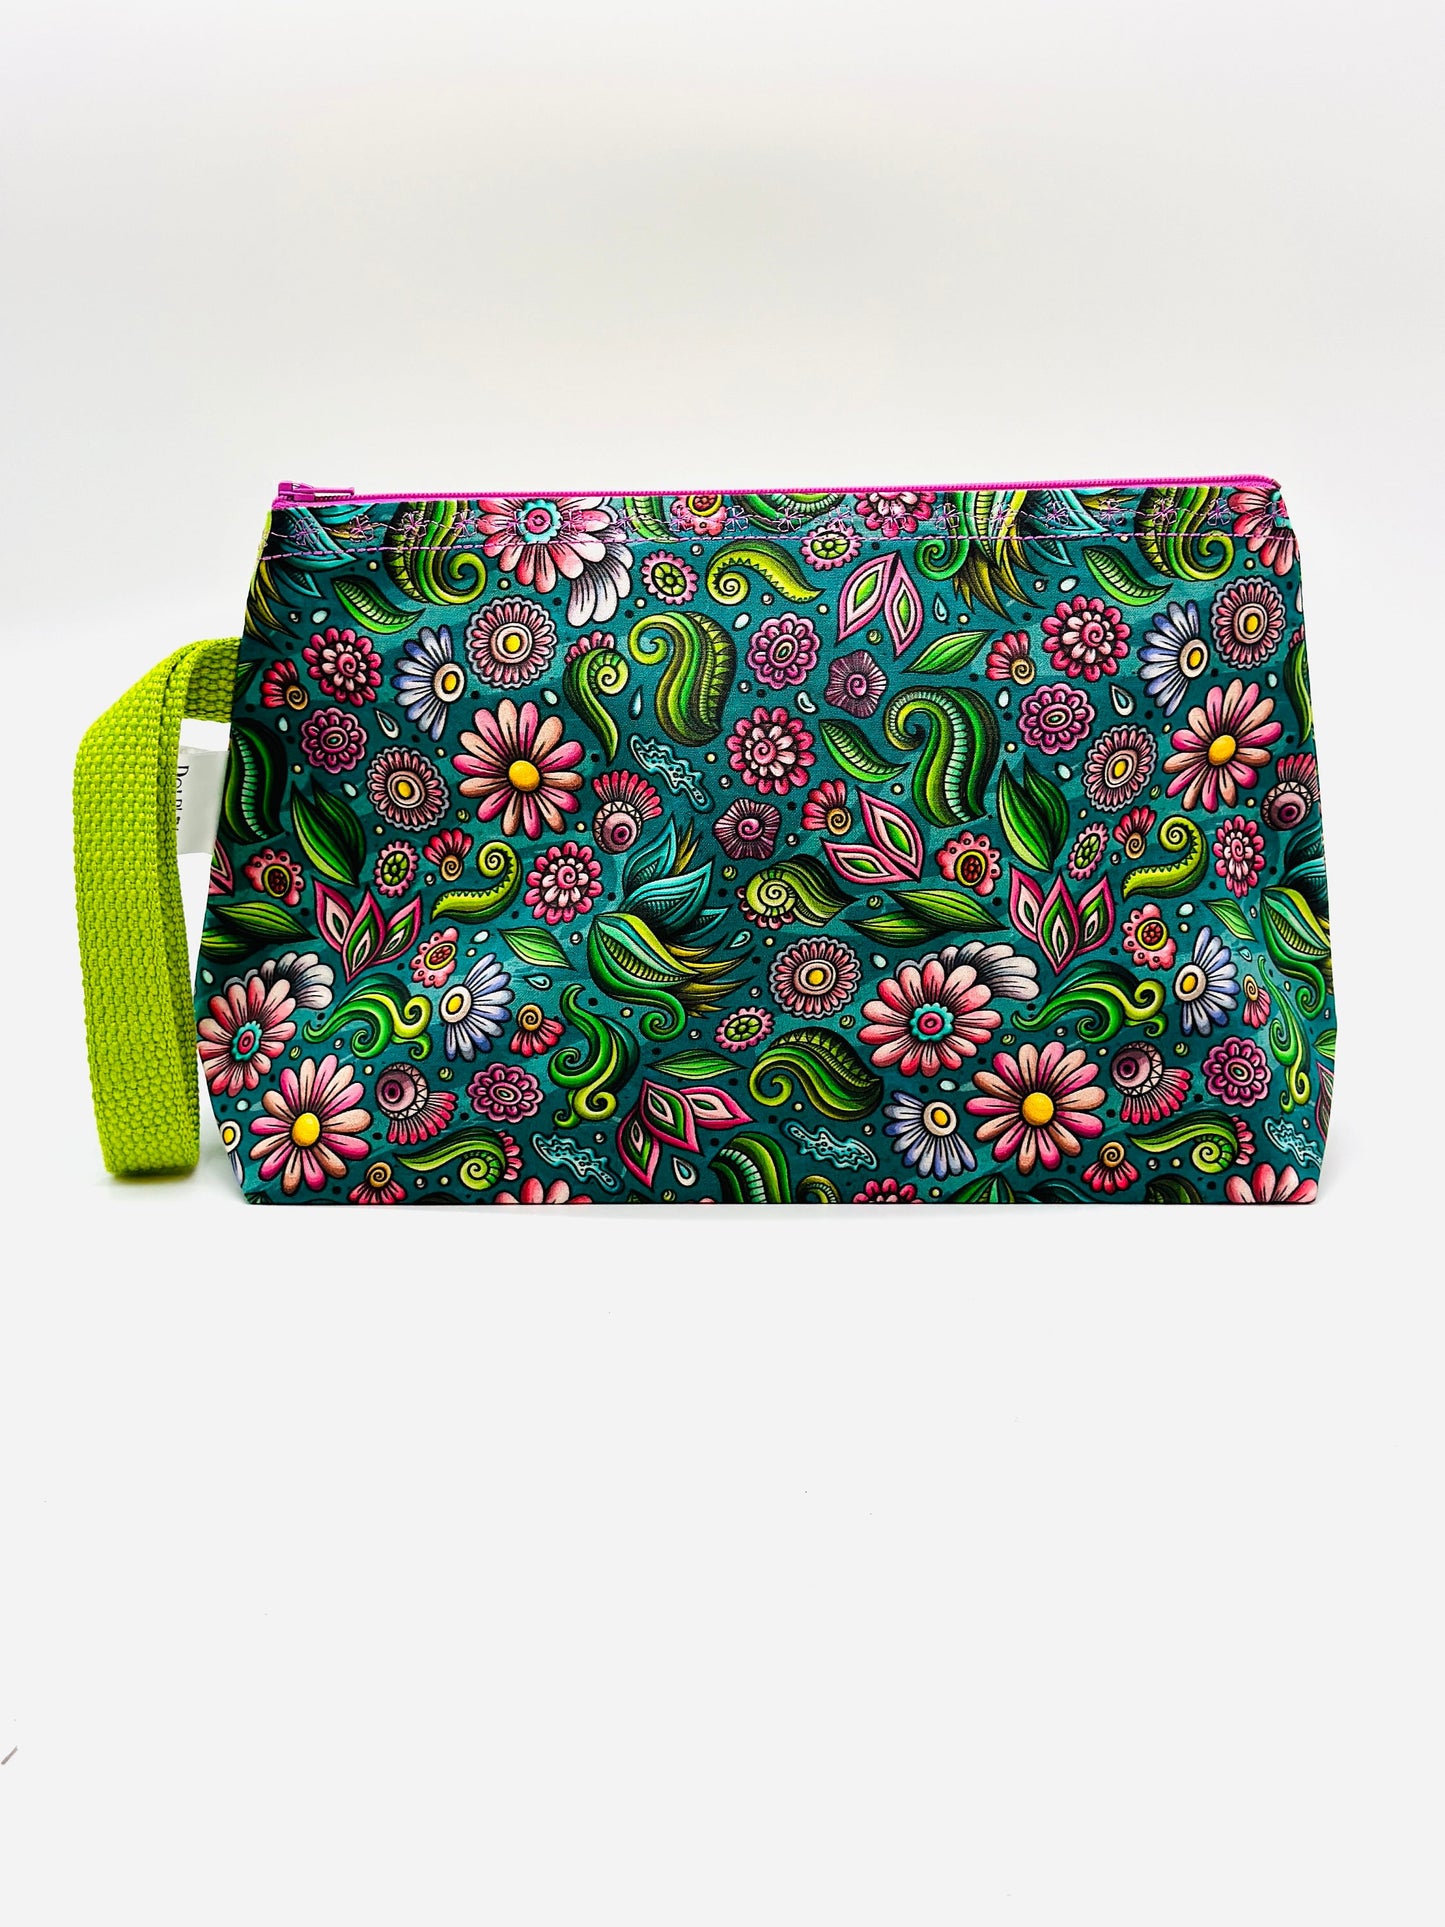 Large project bag - Green Floral Doodle